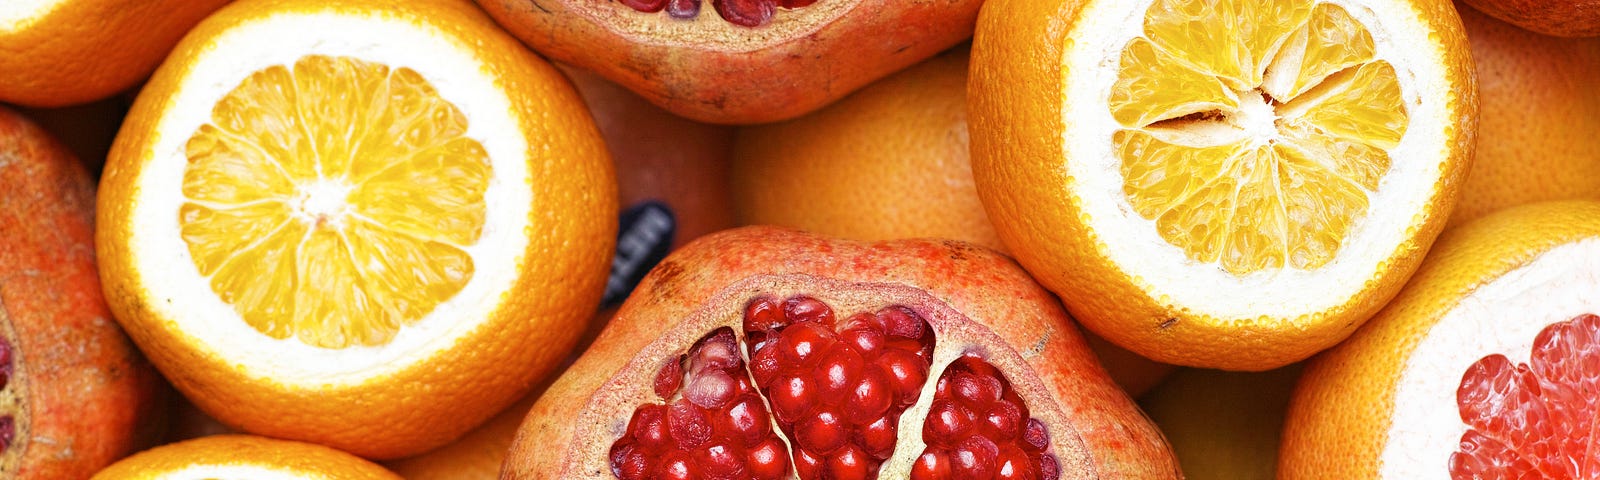 Sliced off citrus fruits — oranges and pomegranates